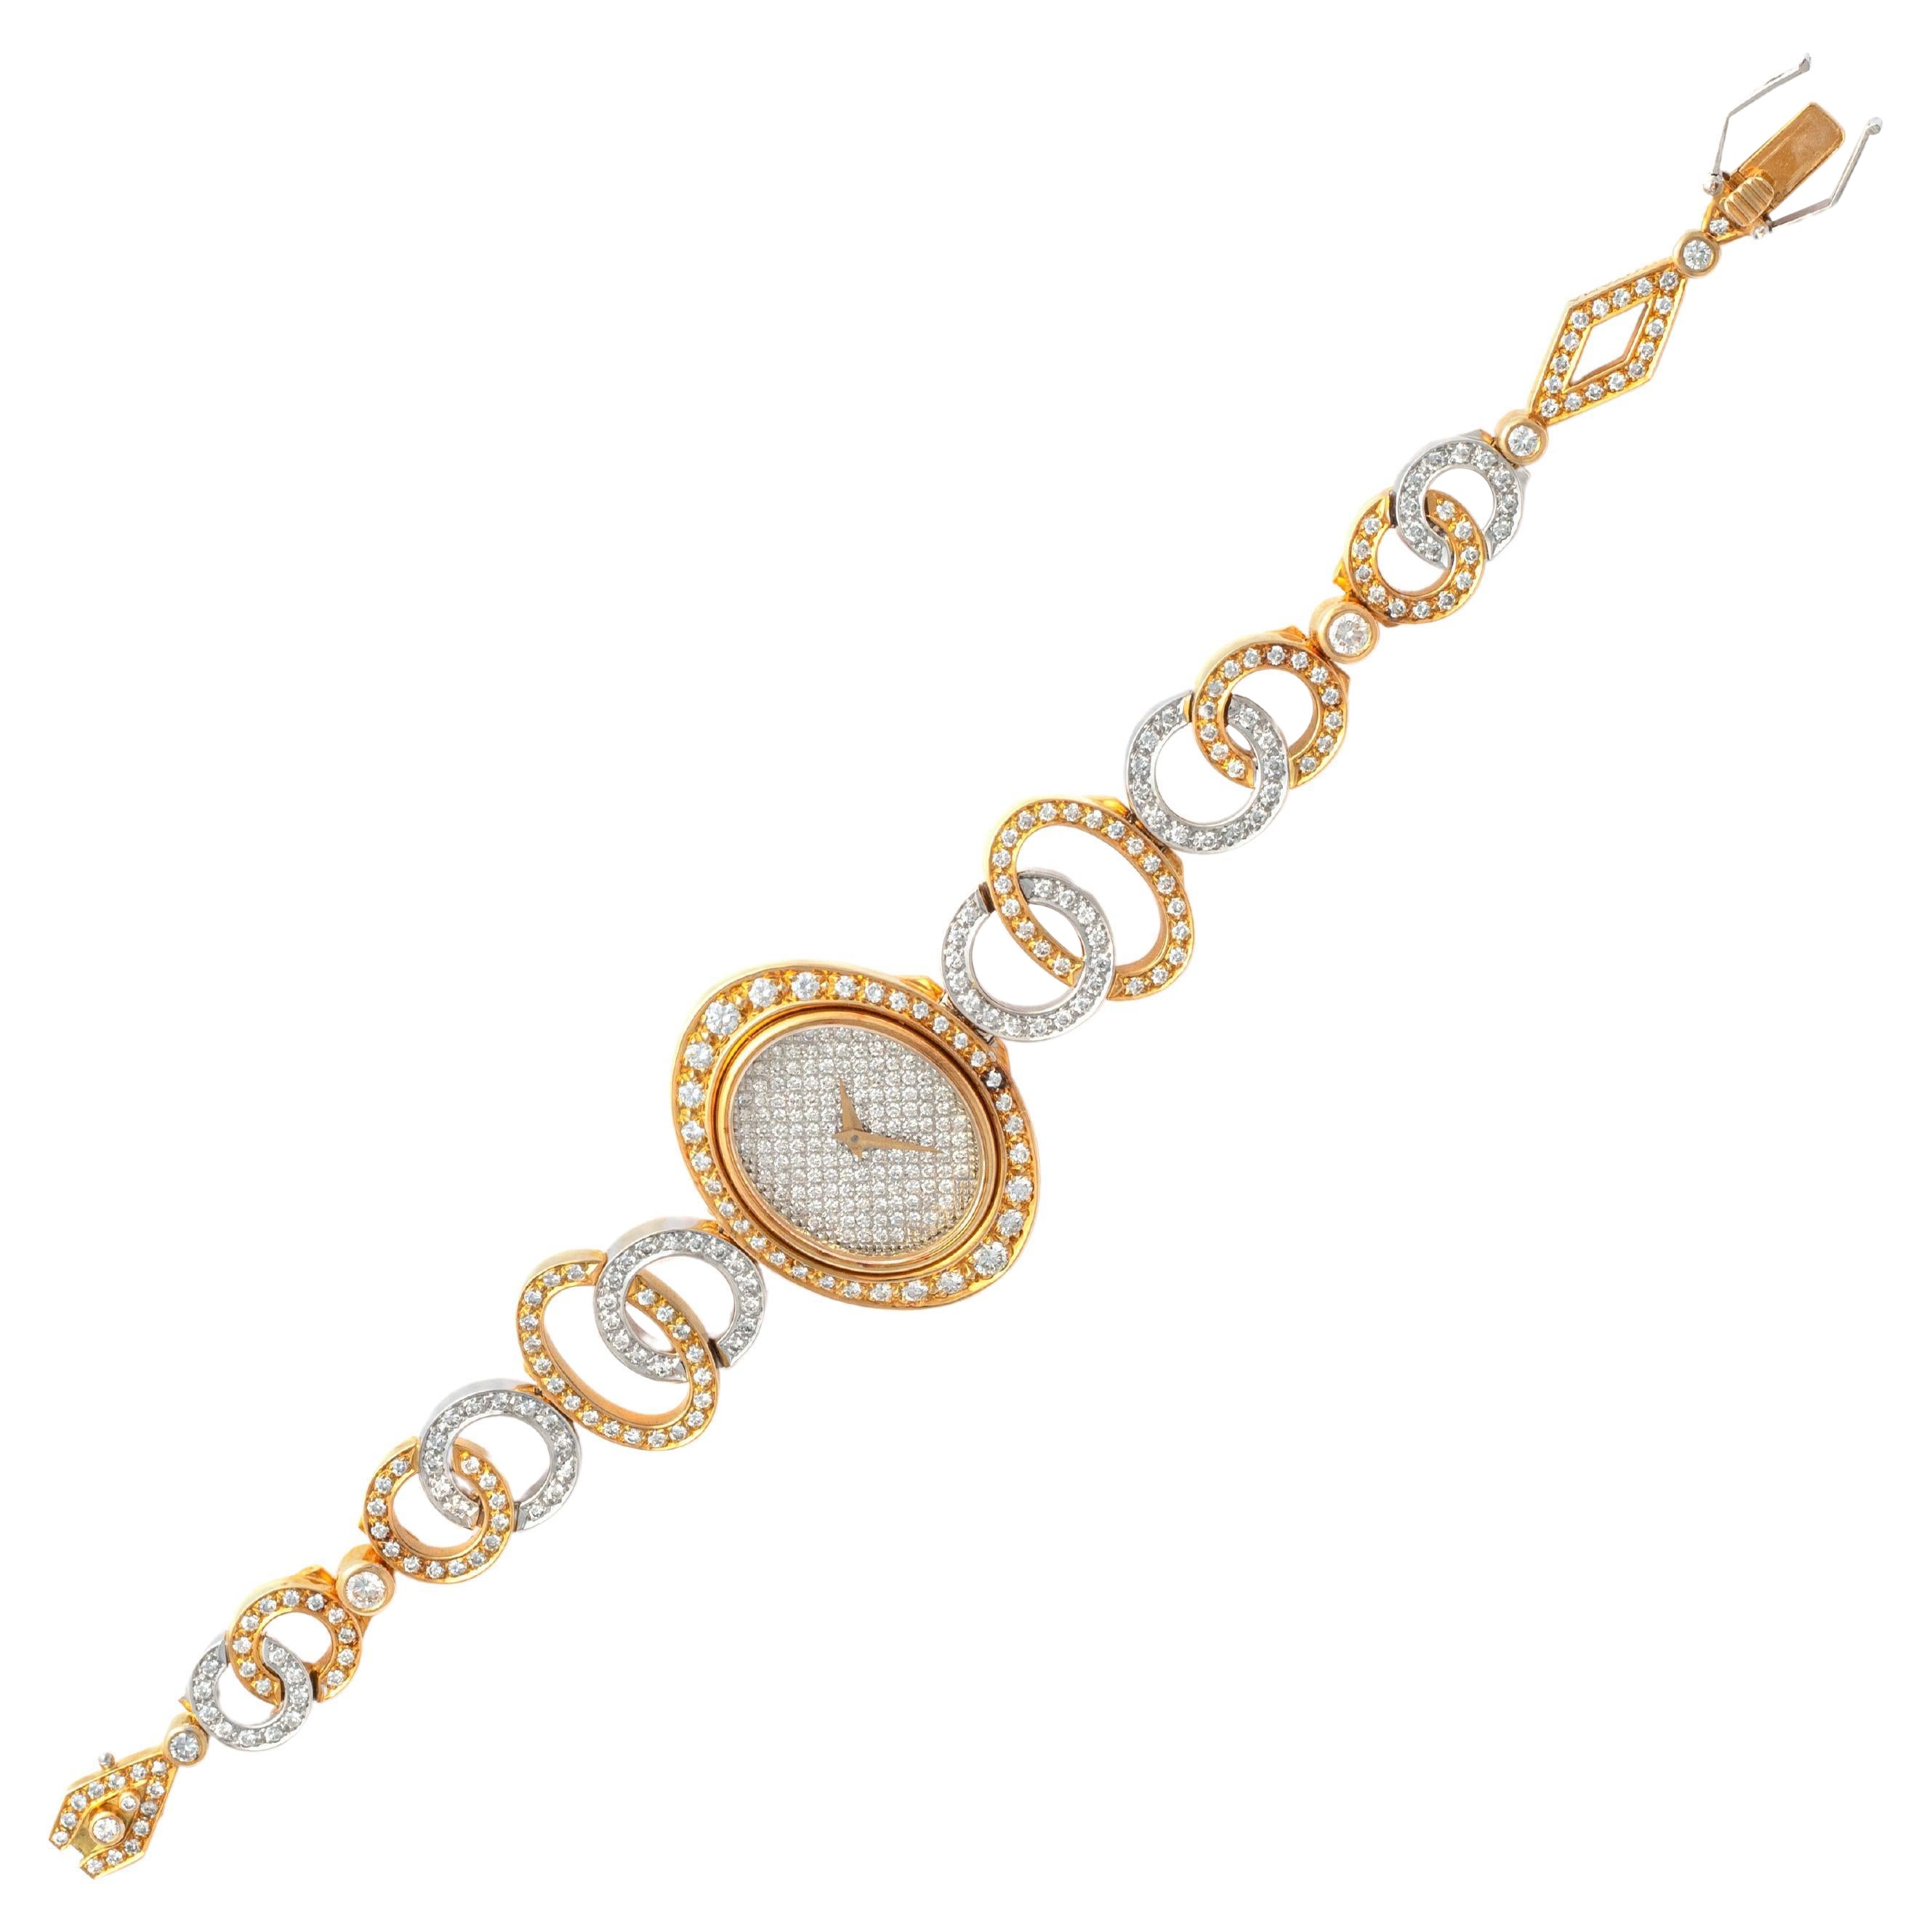 Julia-Plana Diamond Yellow and White Gold 18K Wristwatch 1970S